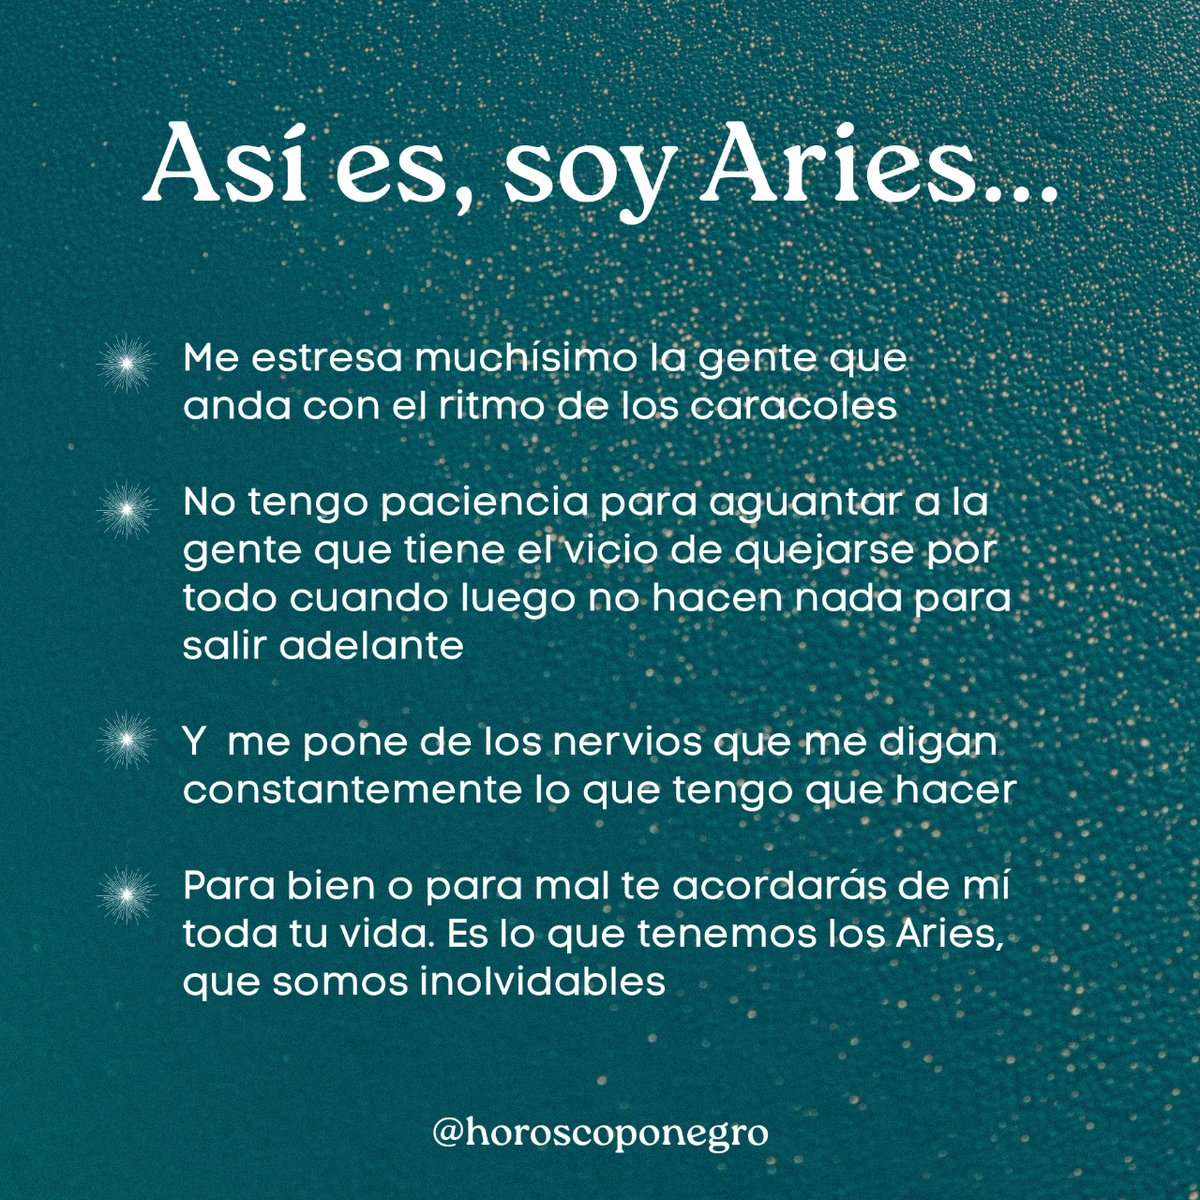 Aries team ✨🔮✨